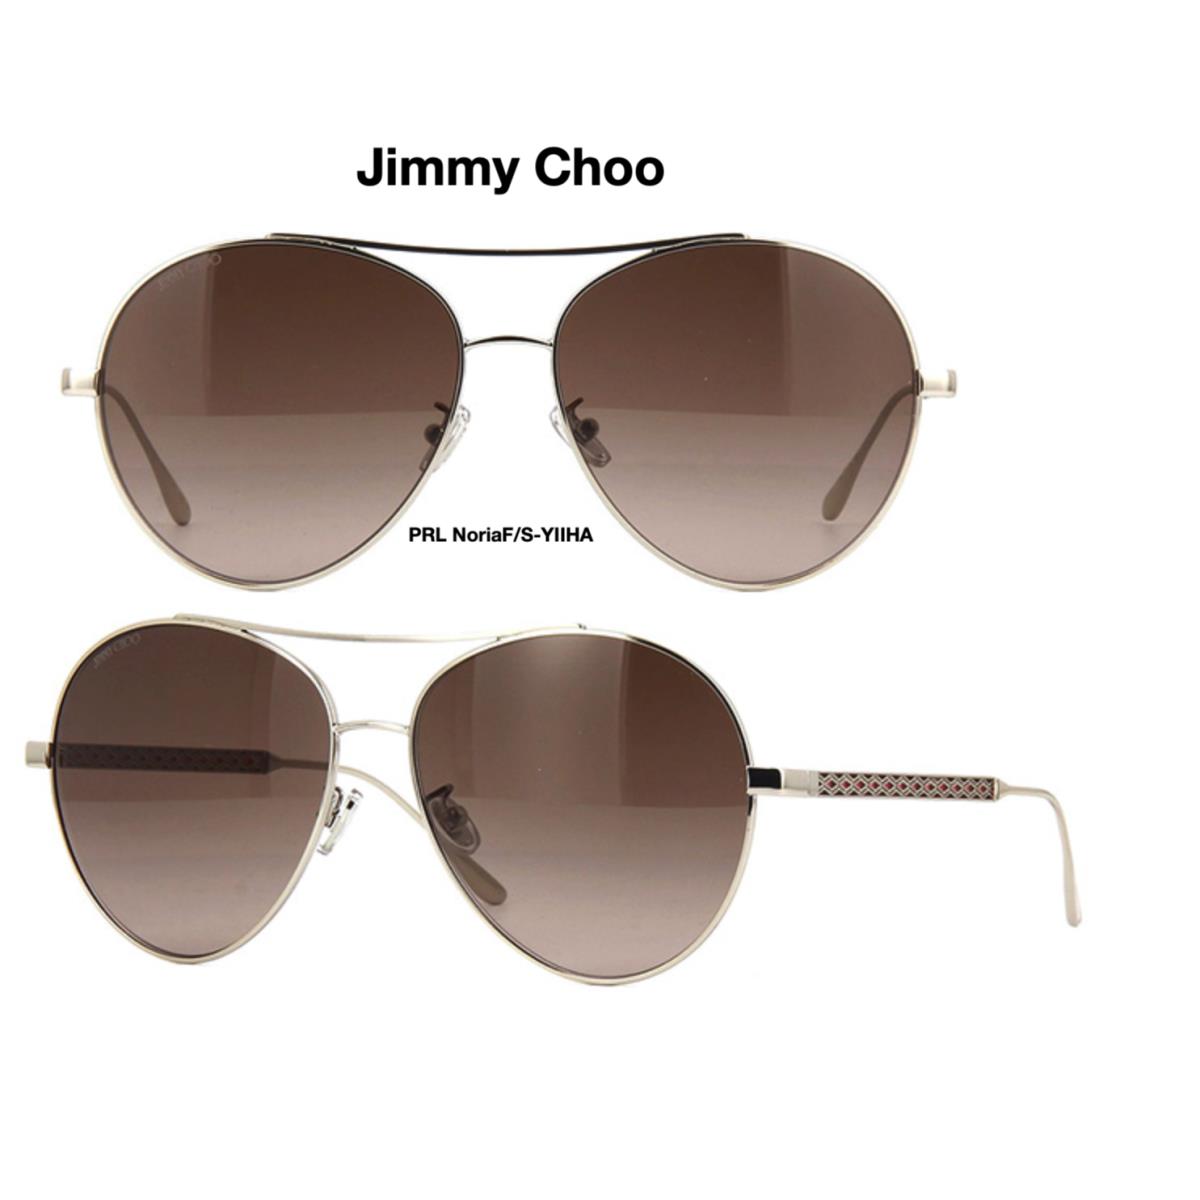 Jimmy Choo Noria F/s Y11HA Aviator Sunglasses Gold/brown Gradient 61mm